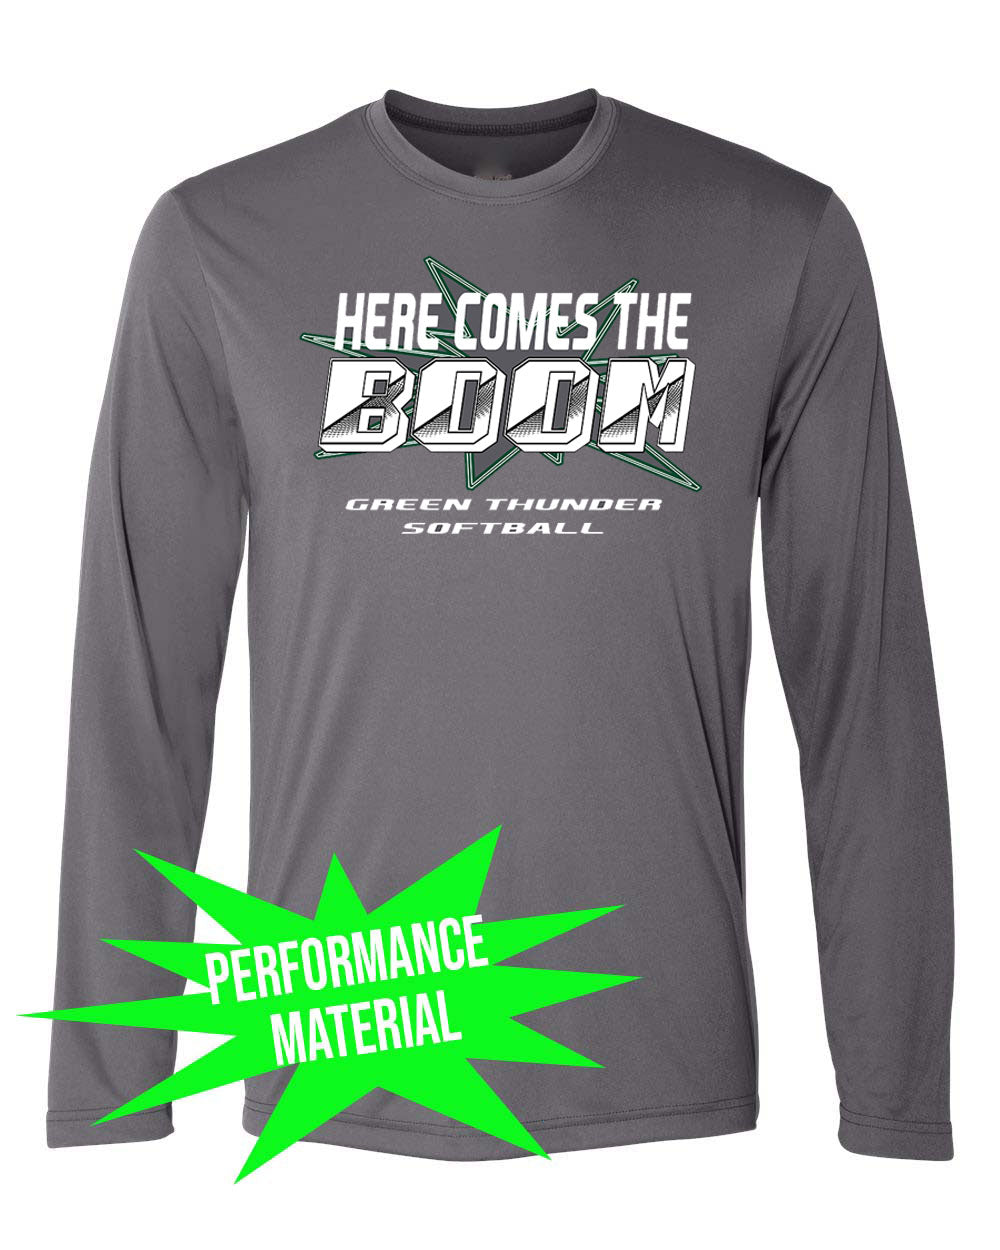 Green Thunder Performance Material Long Sleeve Shirt Design 3